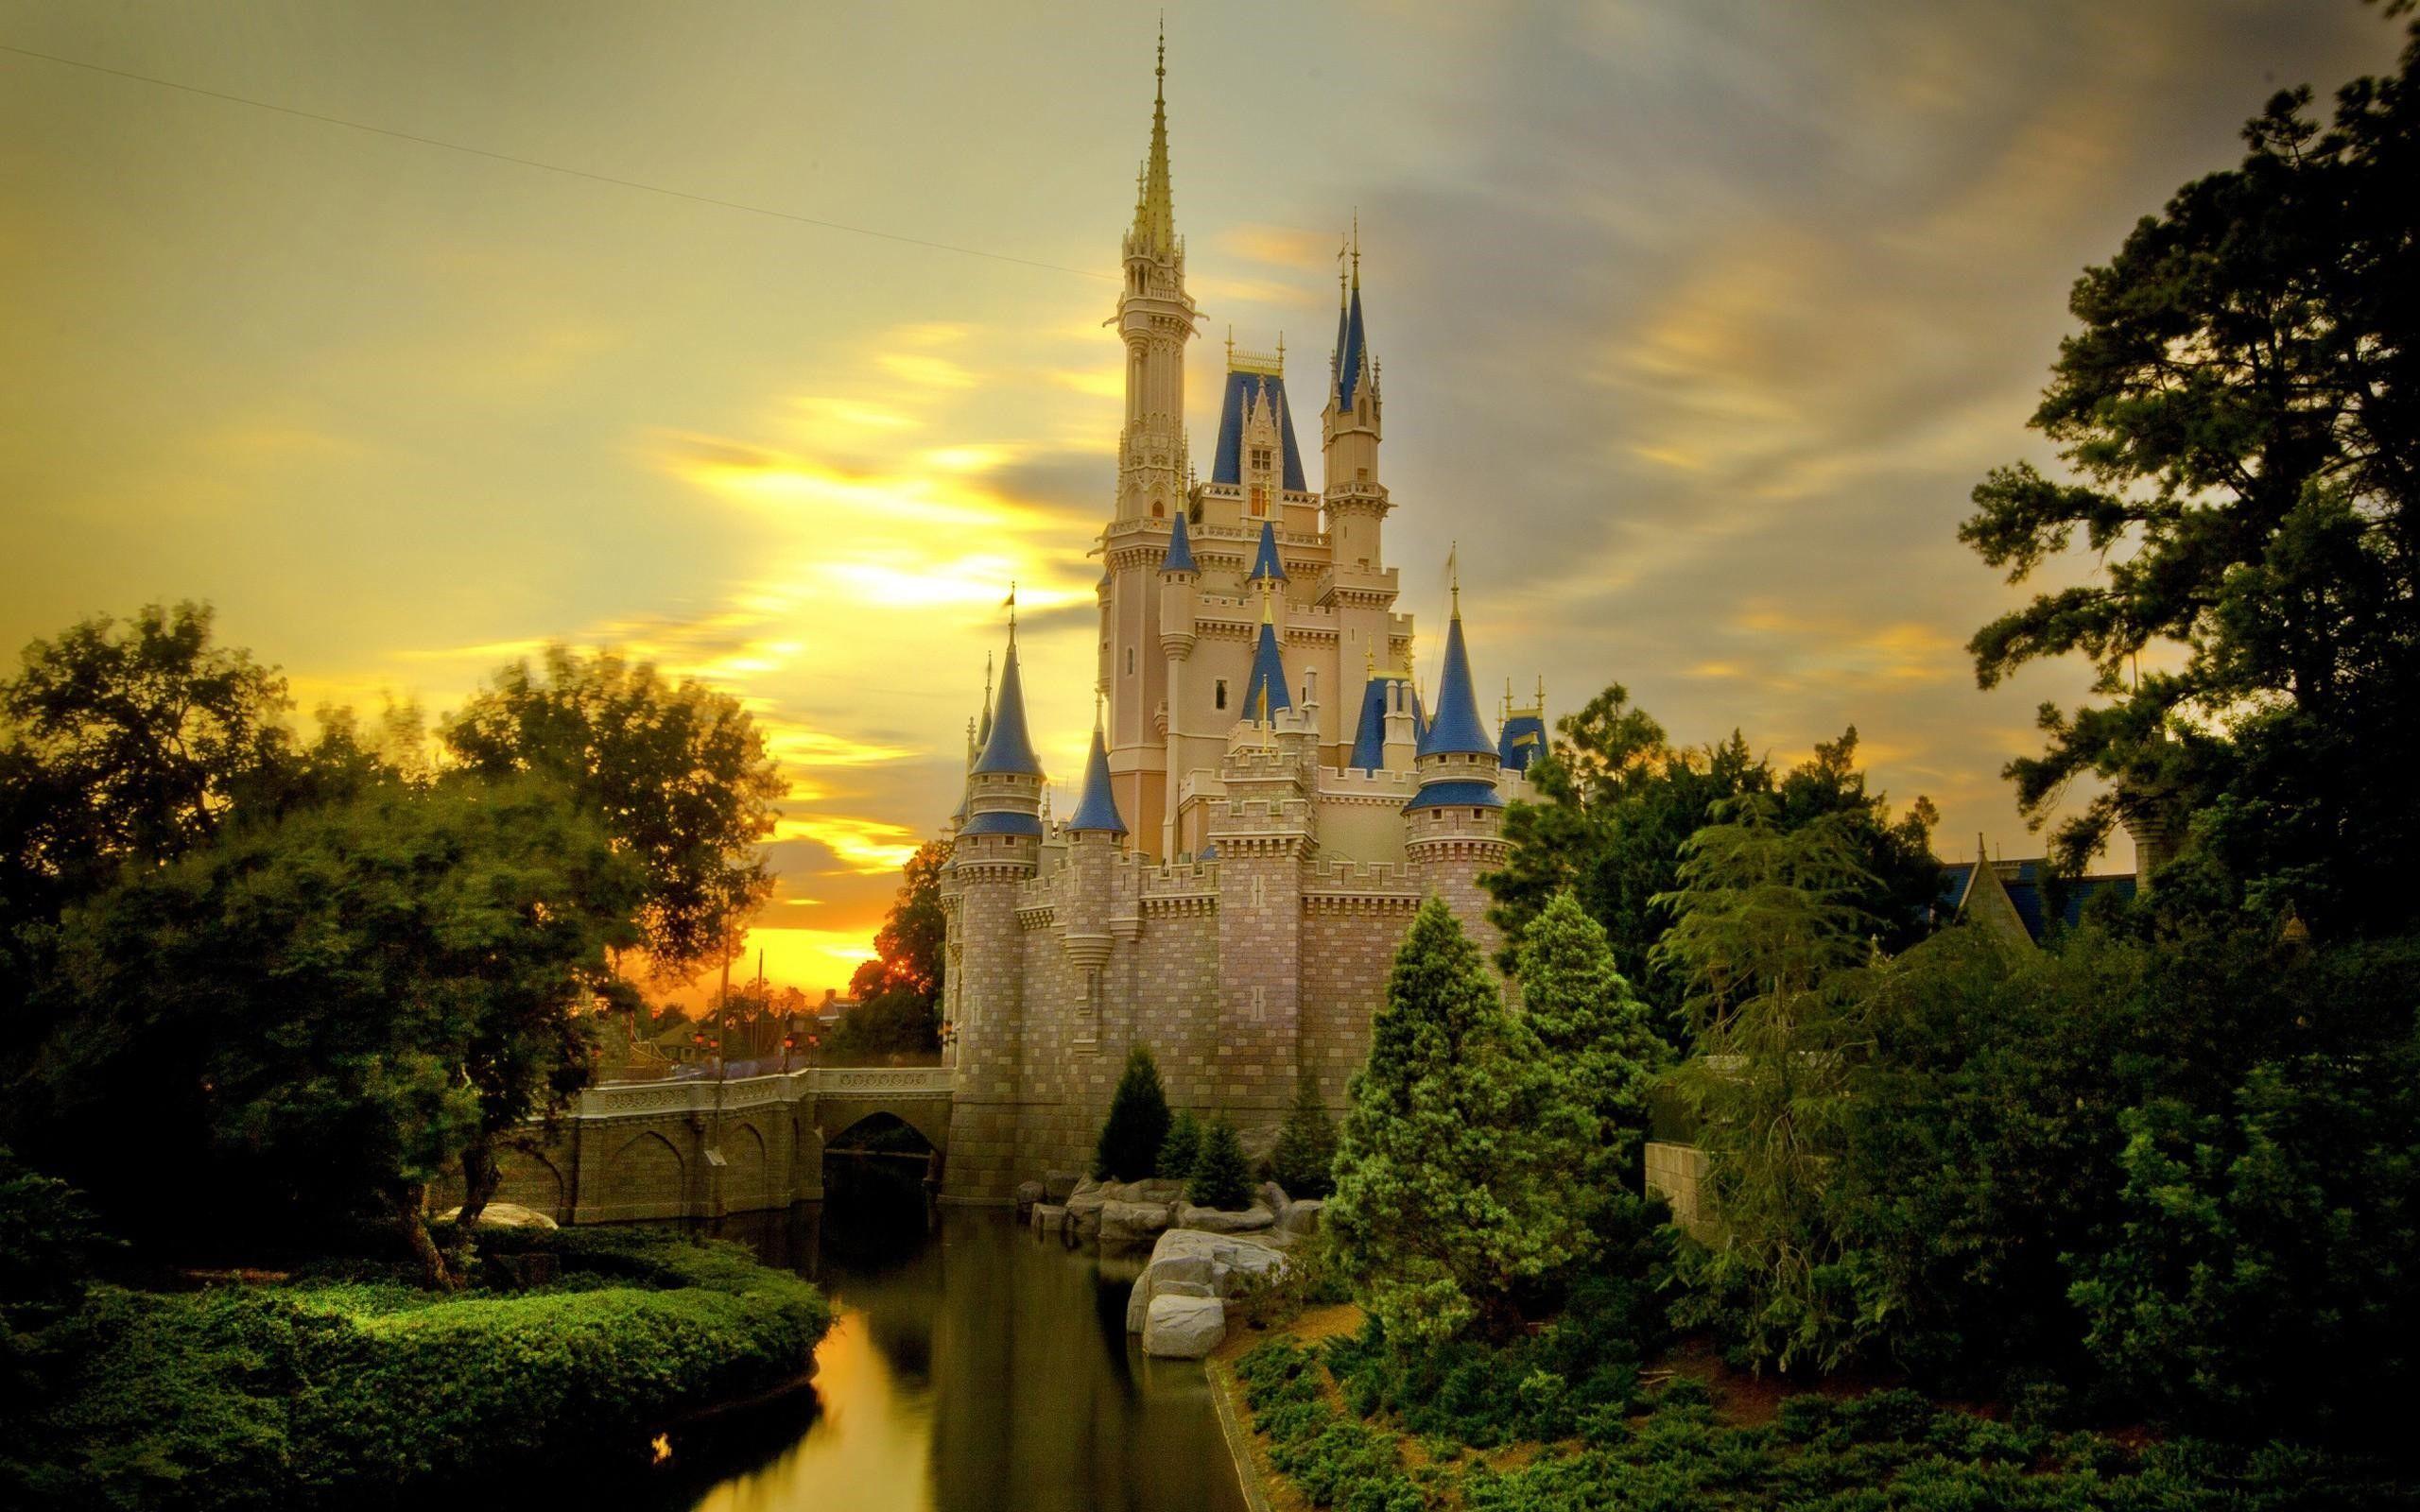 Beautiful Cinderella Castle Image Free Download. HD Wallpaper